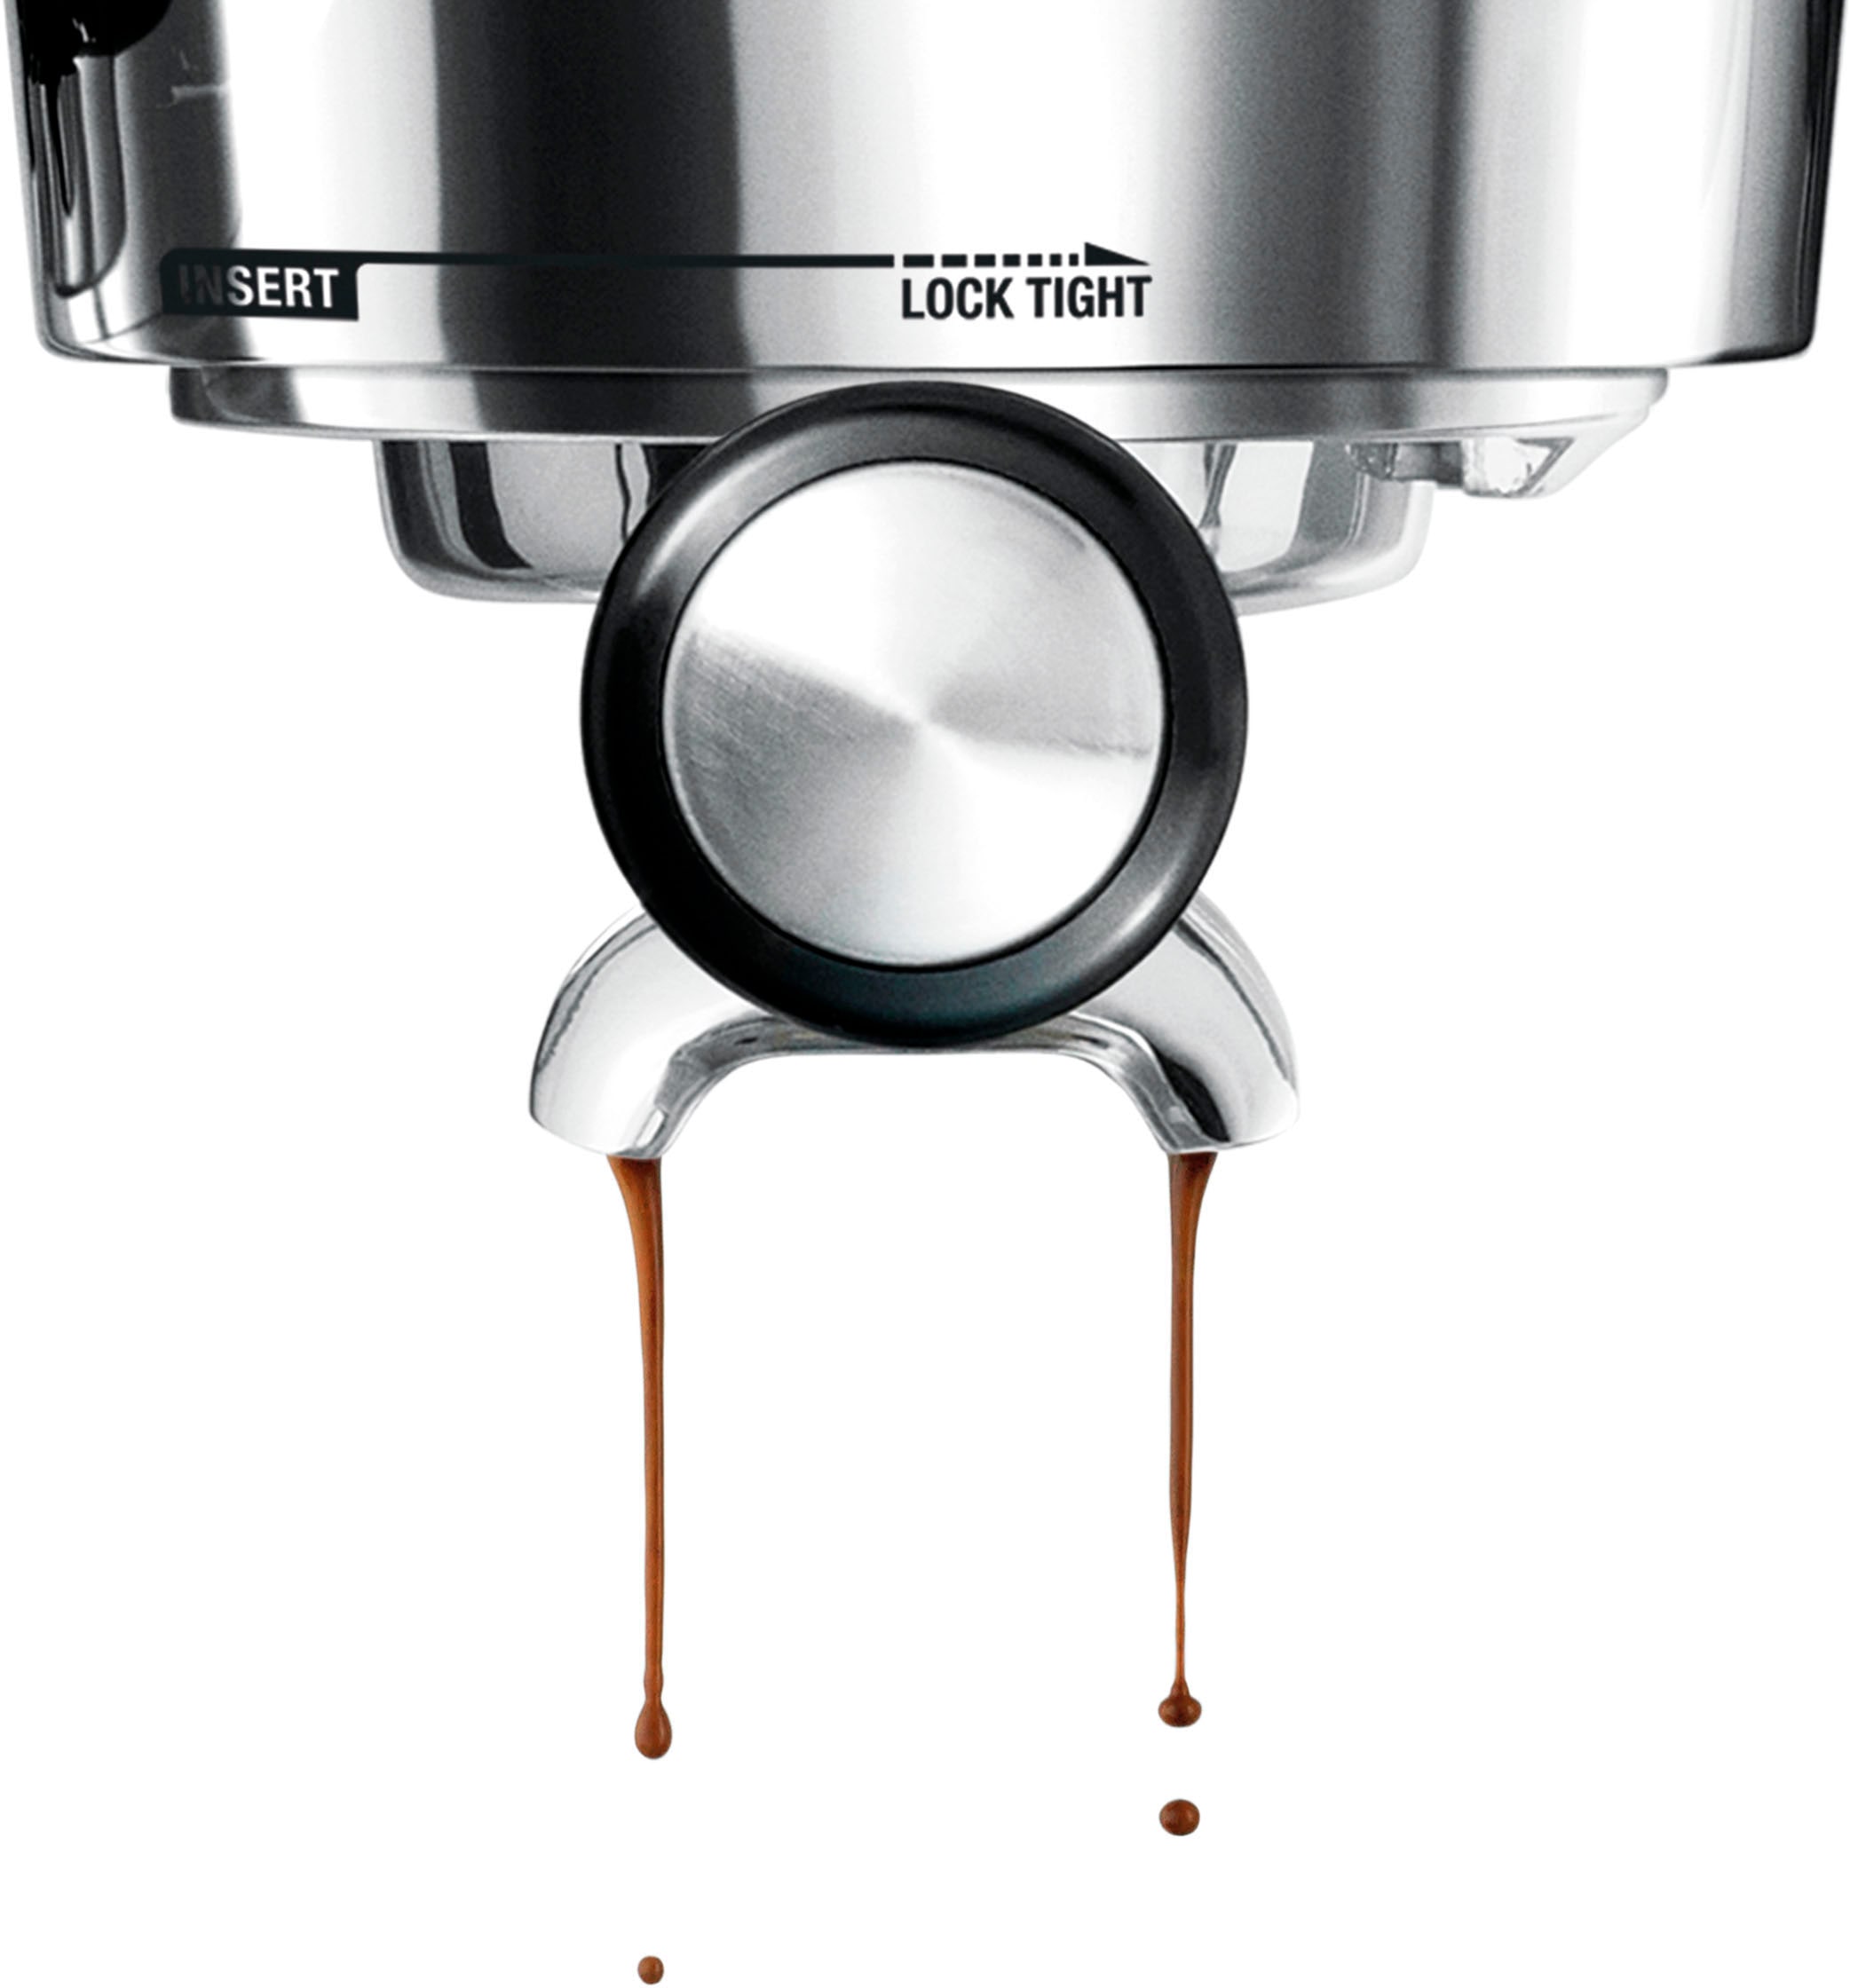 Sage Espressomaschine »the Dual Boiler, SES920BTR, Black Truffle« kaufen |  BAUR